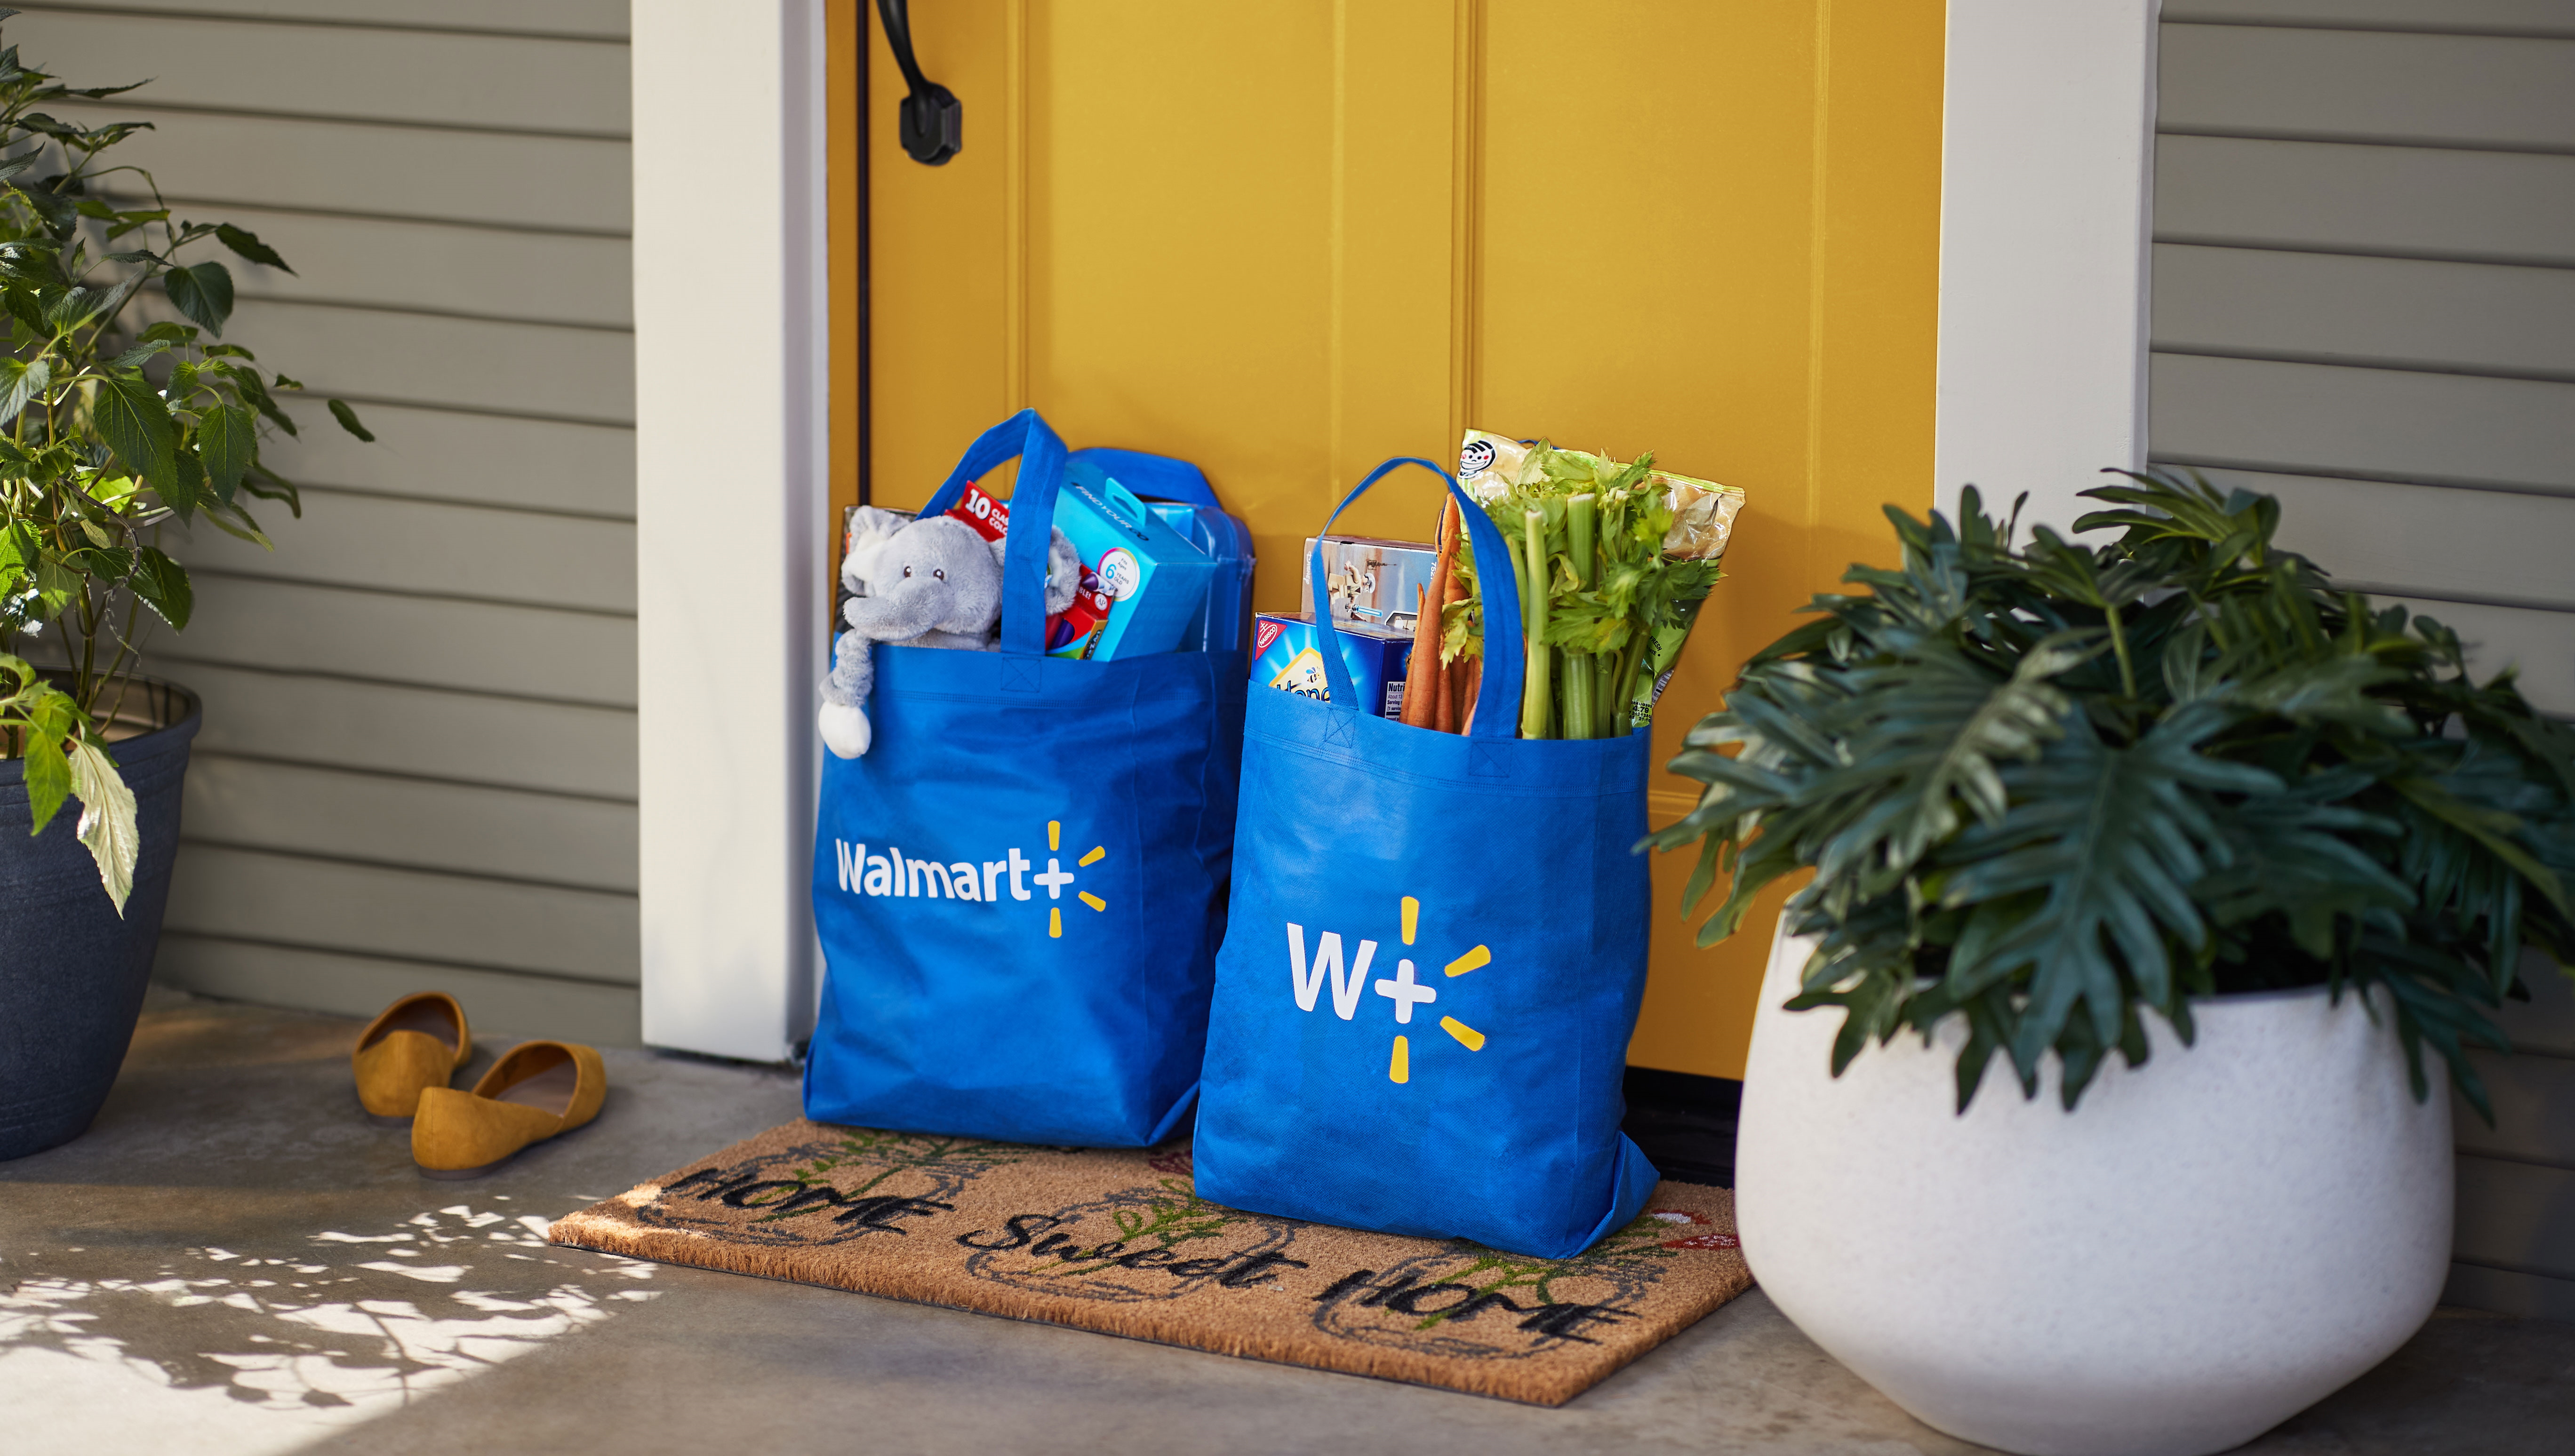 Walmart Plus shopping bag at a door